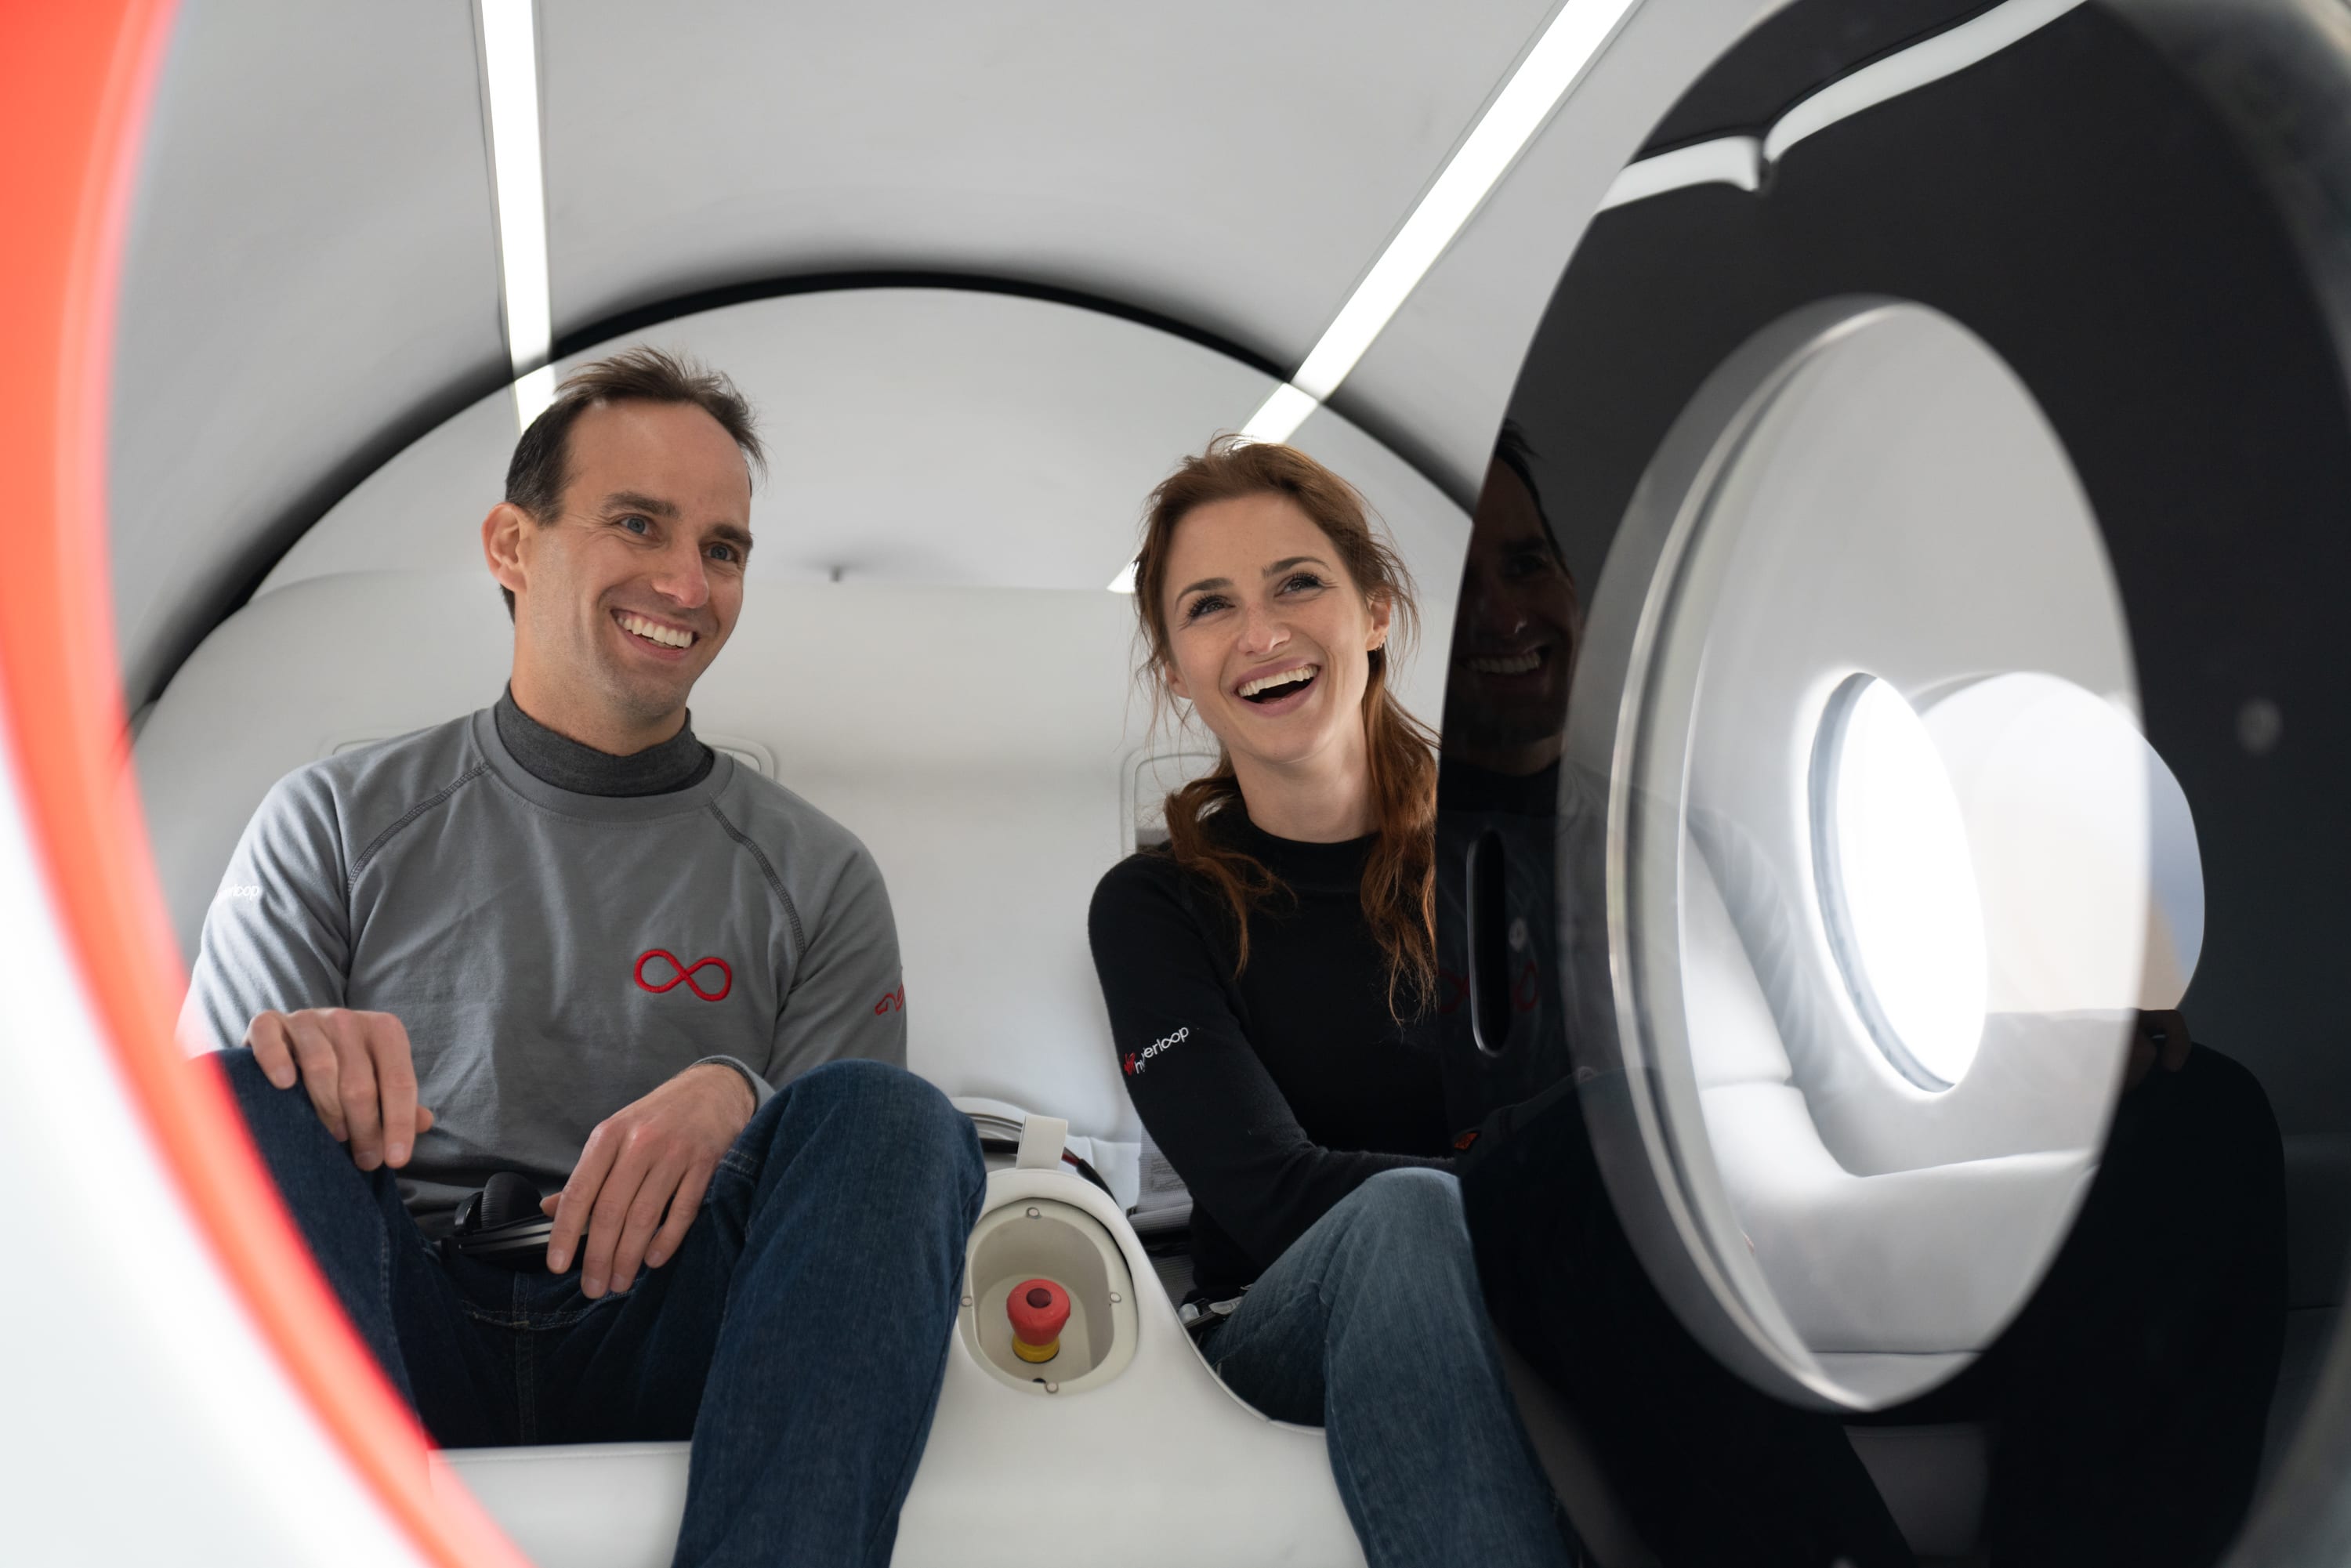 Virgin Hyperloop: First Passengers Travel in a Levitating Pod System